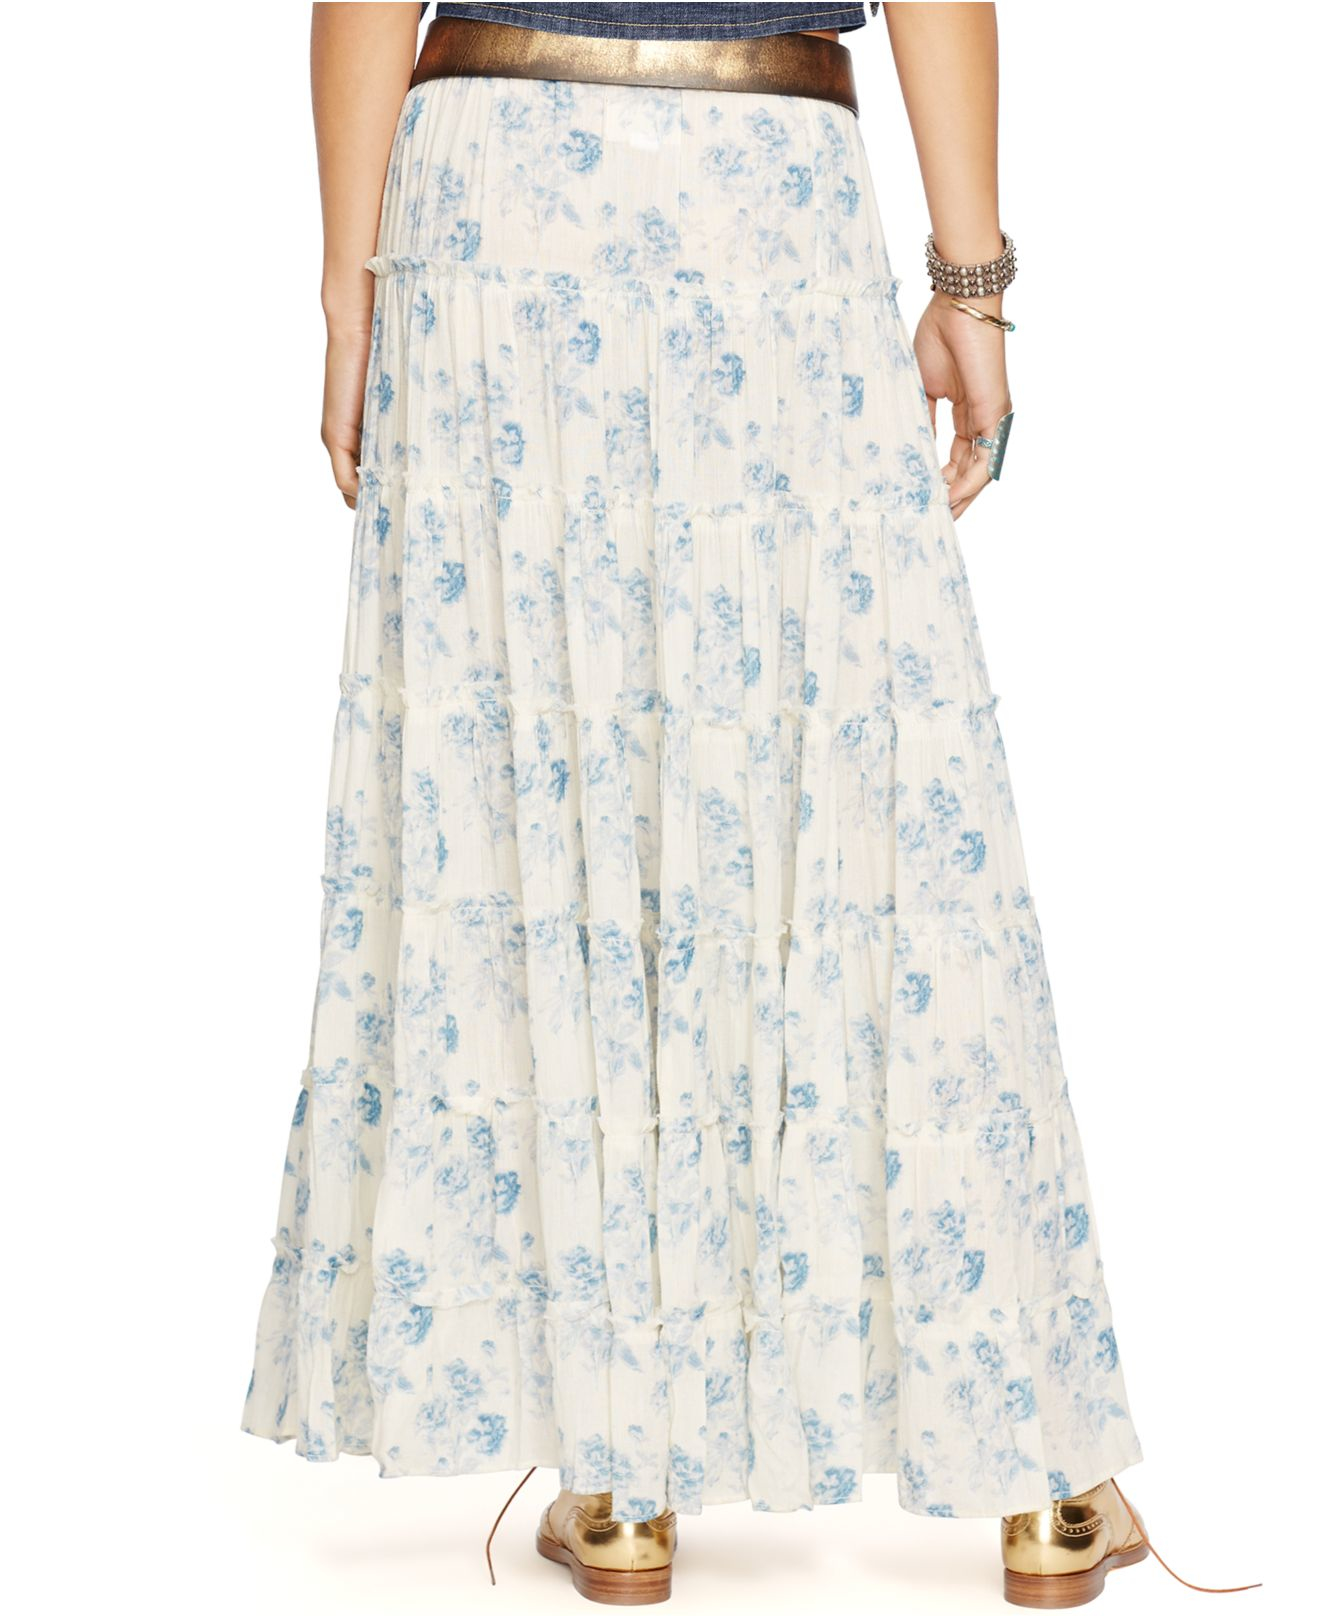 Lyst - Denim & supply ralph lauren Floral-print Maxi Skirt in Blue